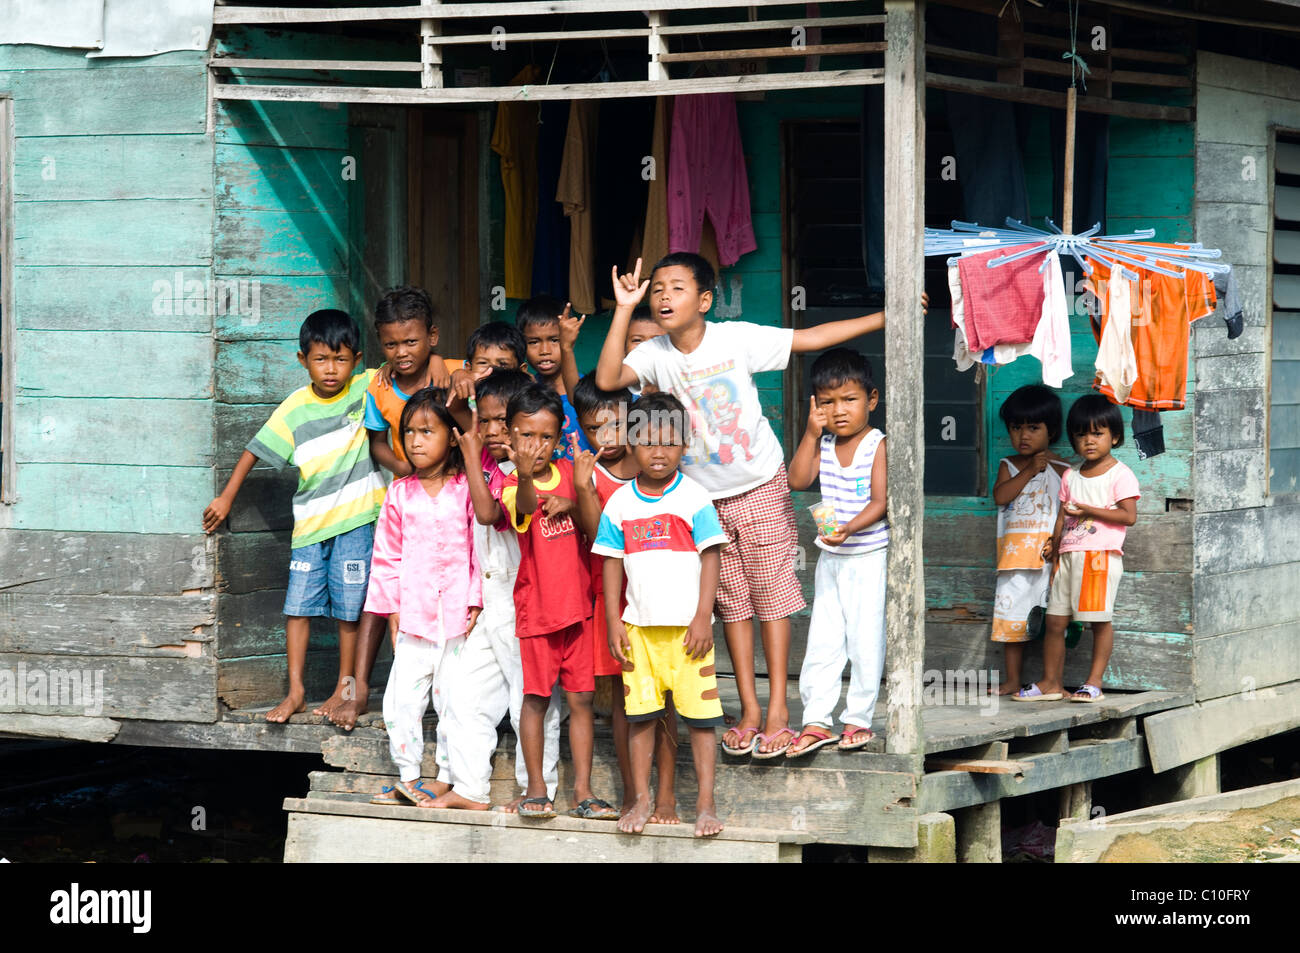 Los niños tanjung batu pulau kundur islas Riau indonesia Foto de stock